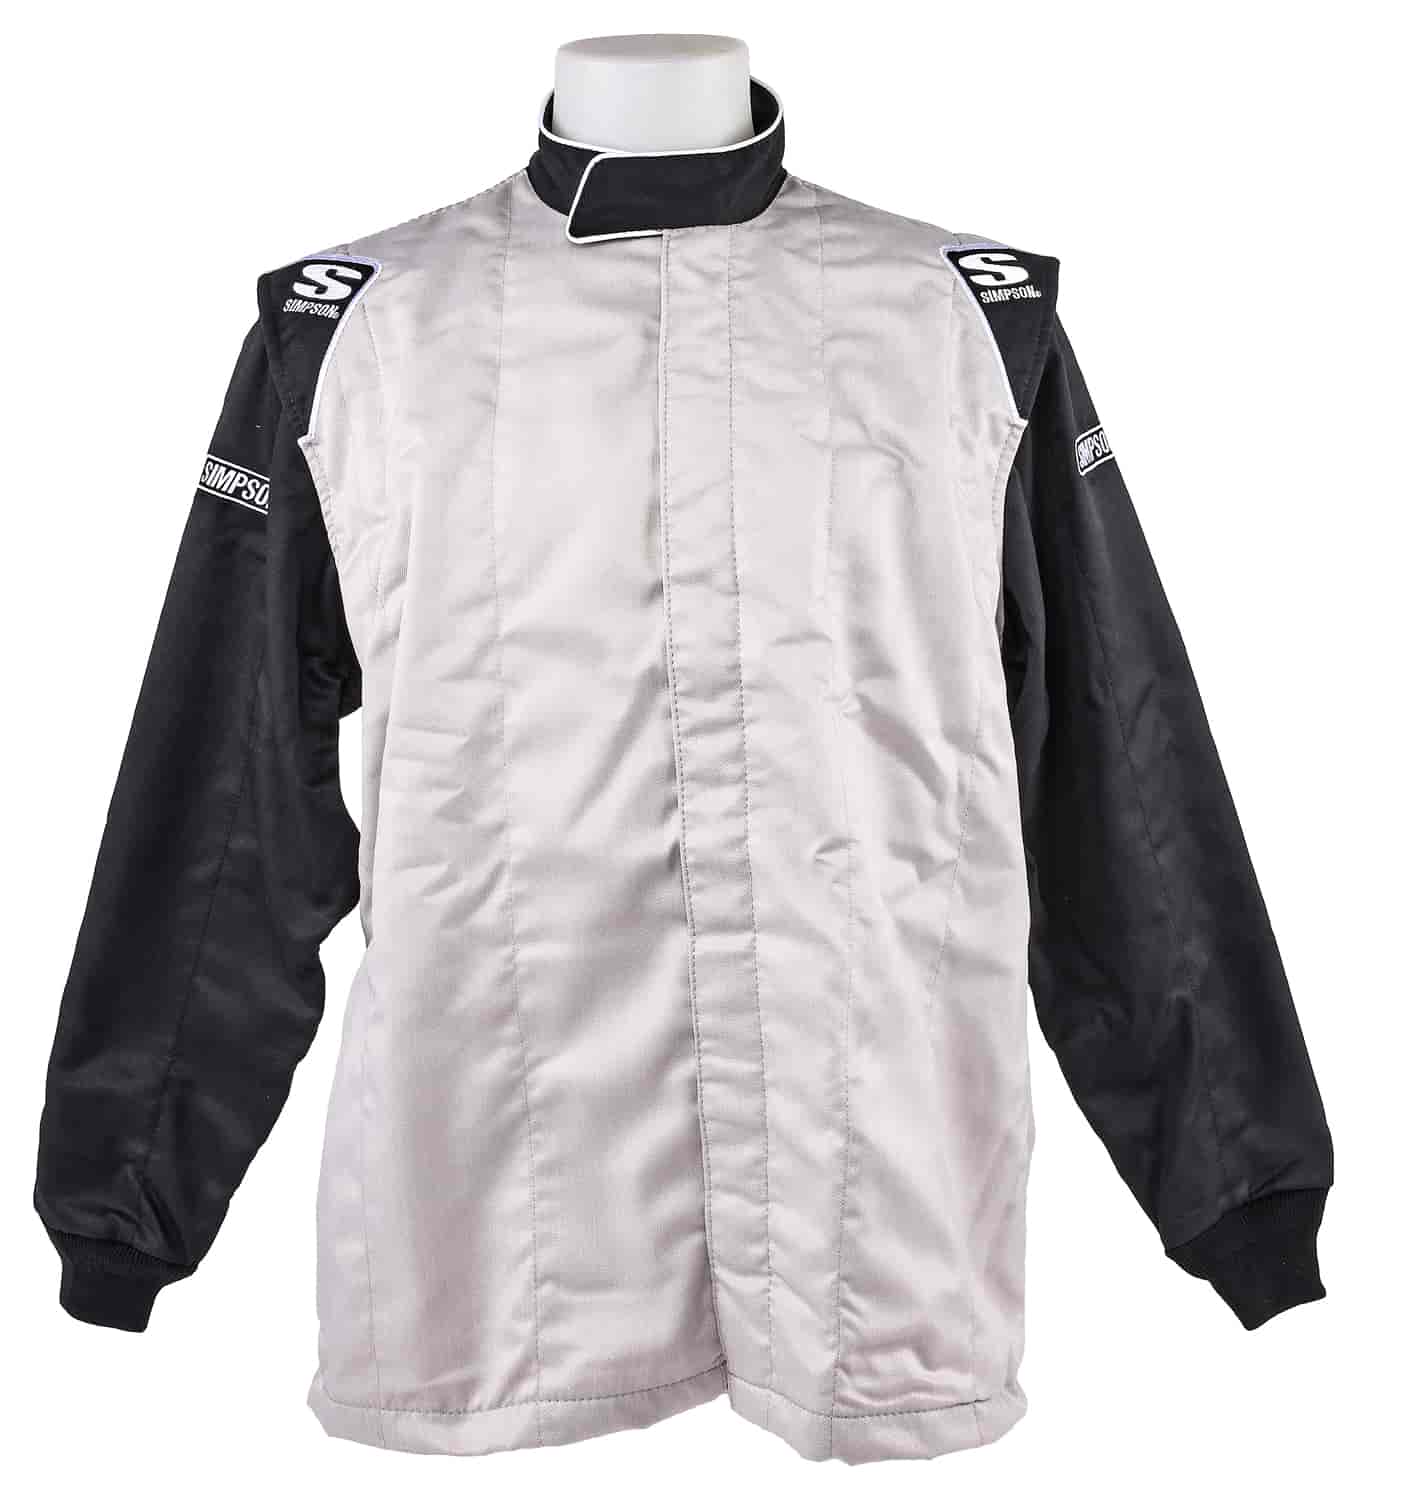 Elite III Sportsman Jacket with Arm Restraints Large